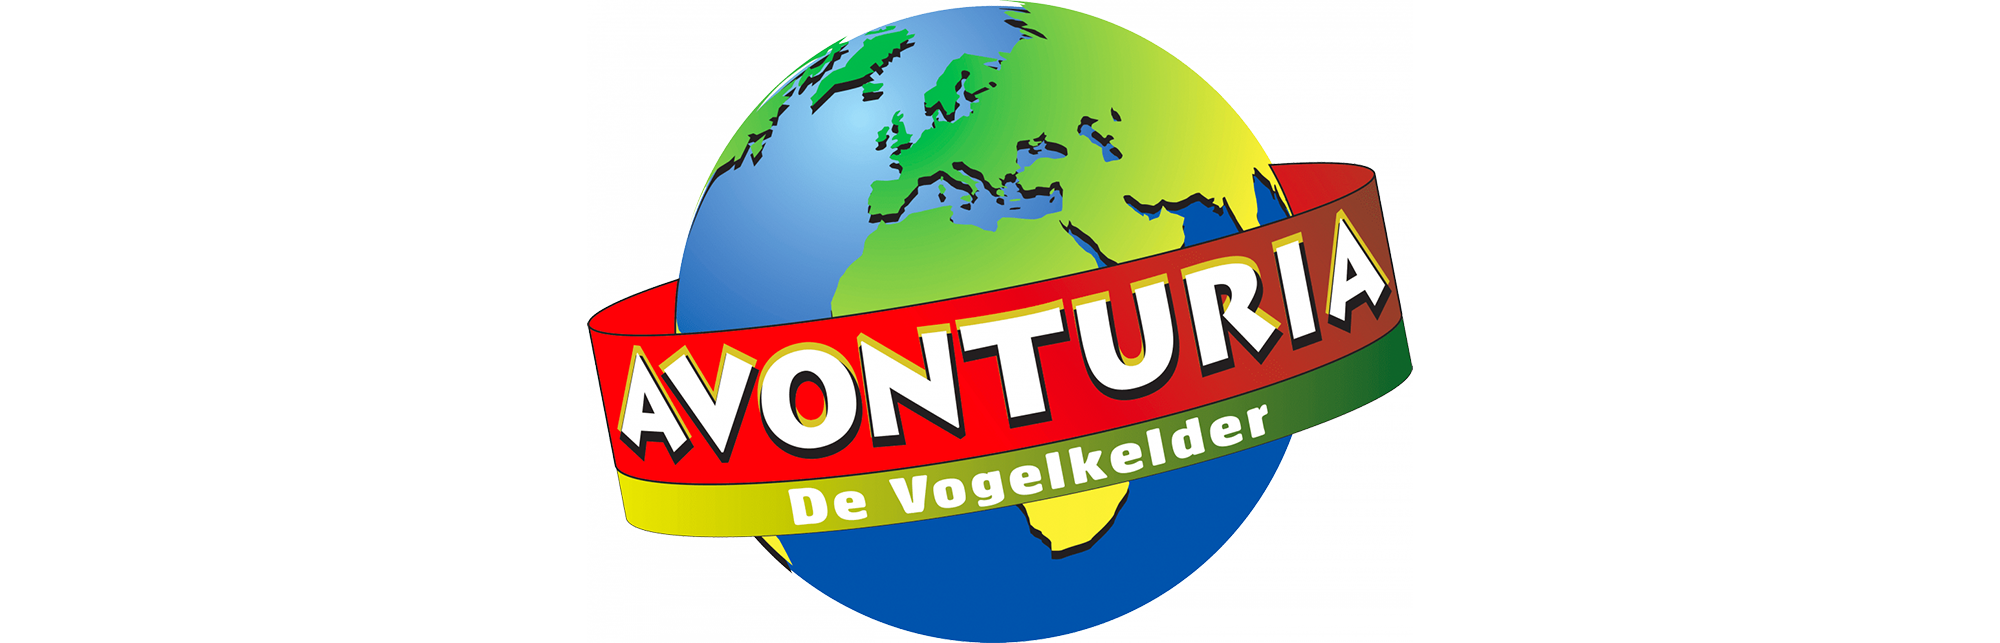 Logo-Avonturia-de-Vogelkelder-Den-Haag